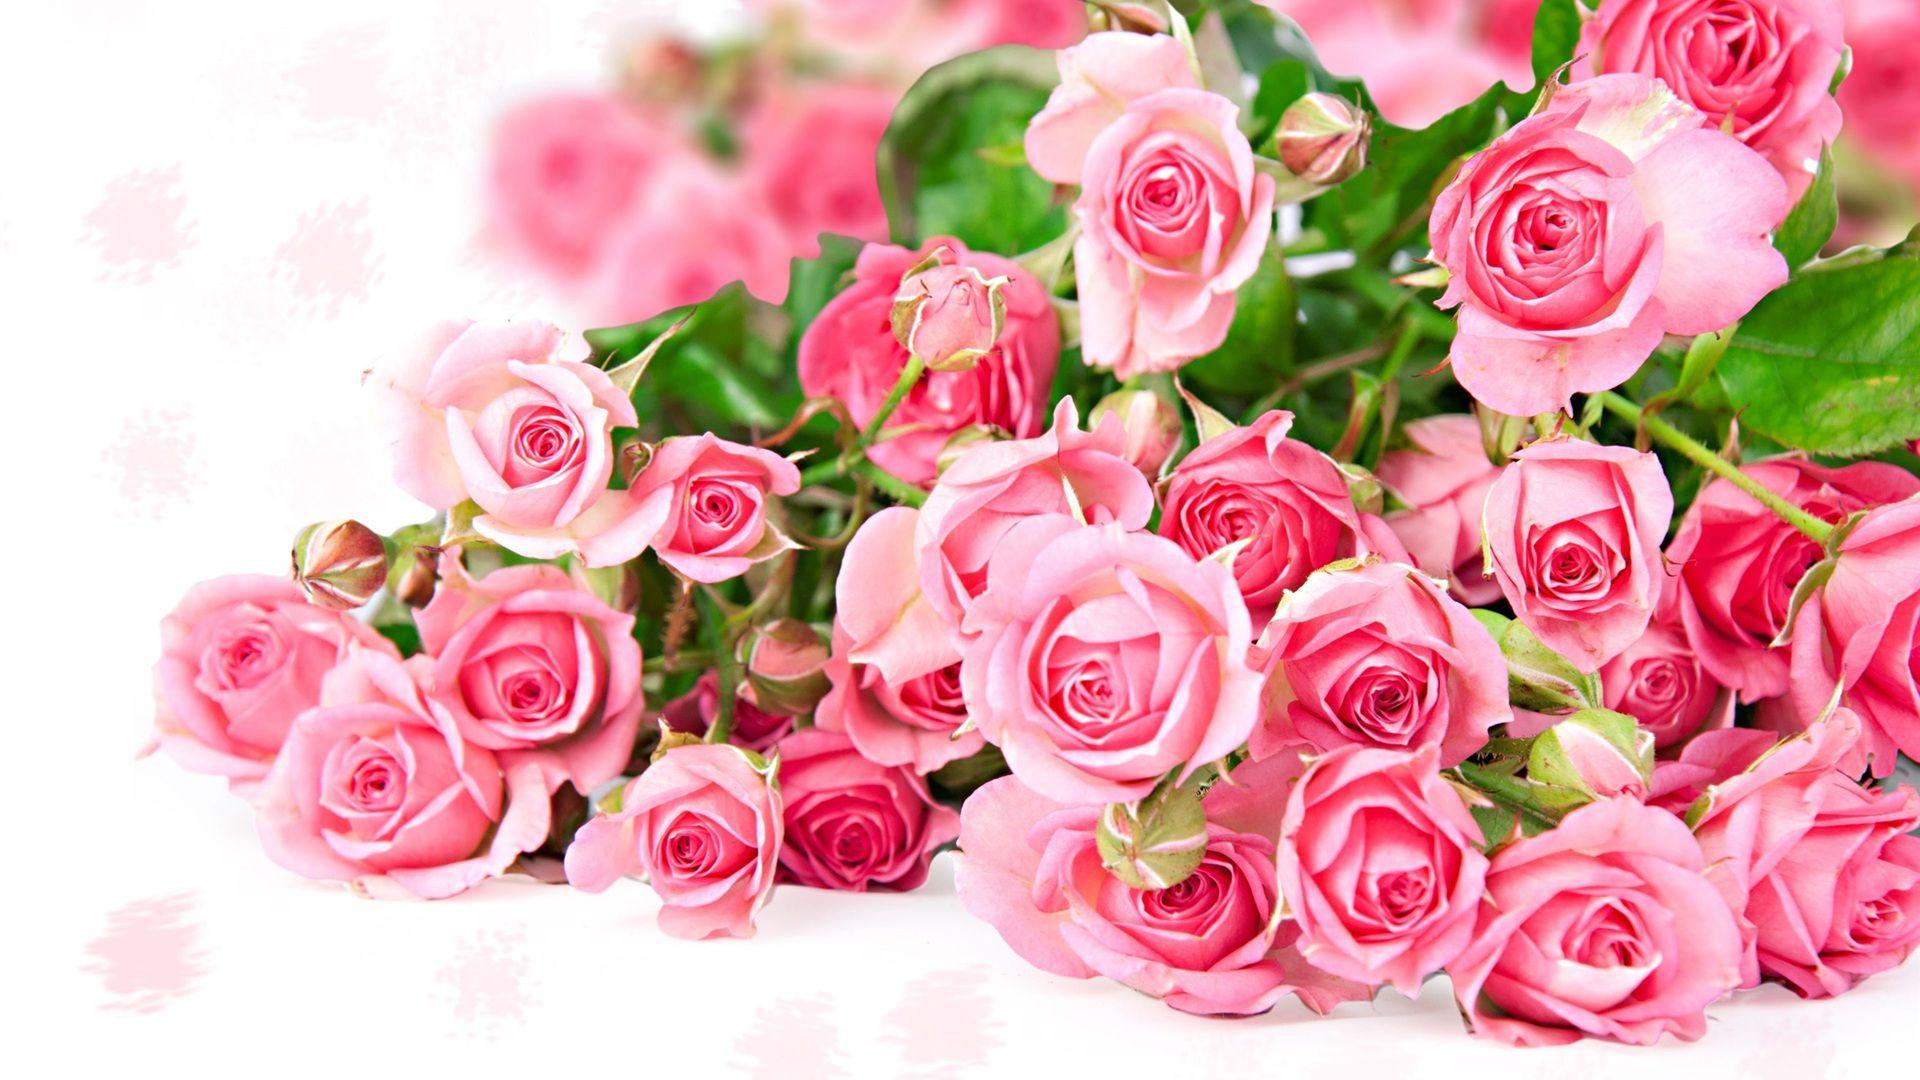 Pink Rose Picture download free. Wallpaper, Background, Image, Art Photo. Rose flower wallpaper, Pink rose bouquet, Pink flowers background